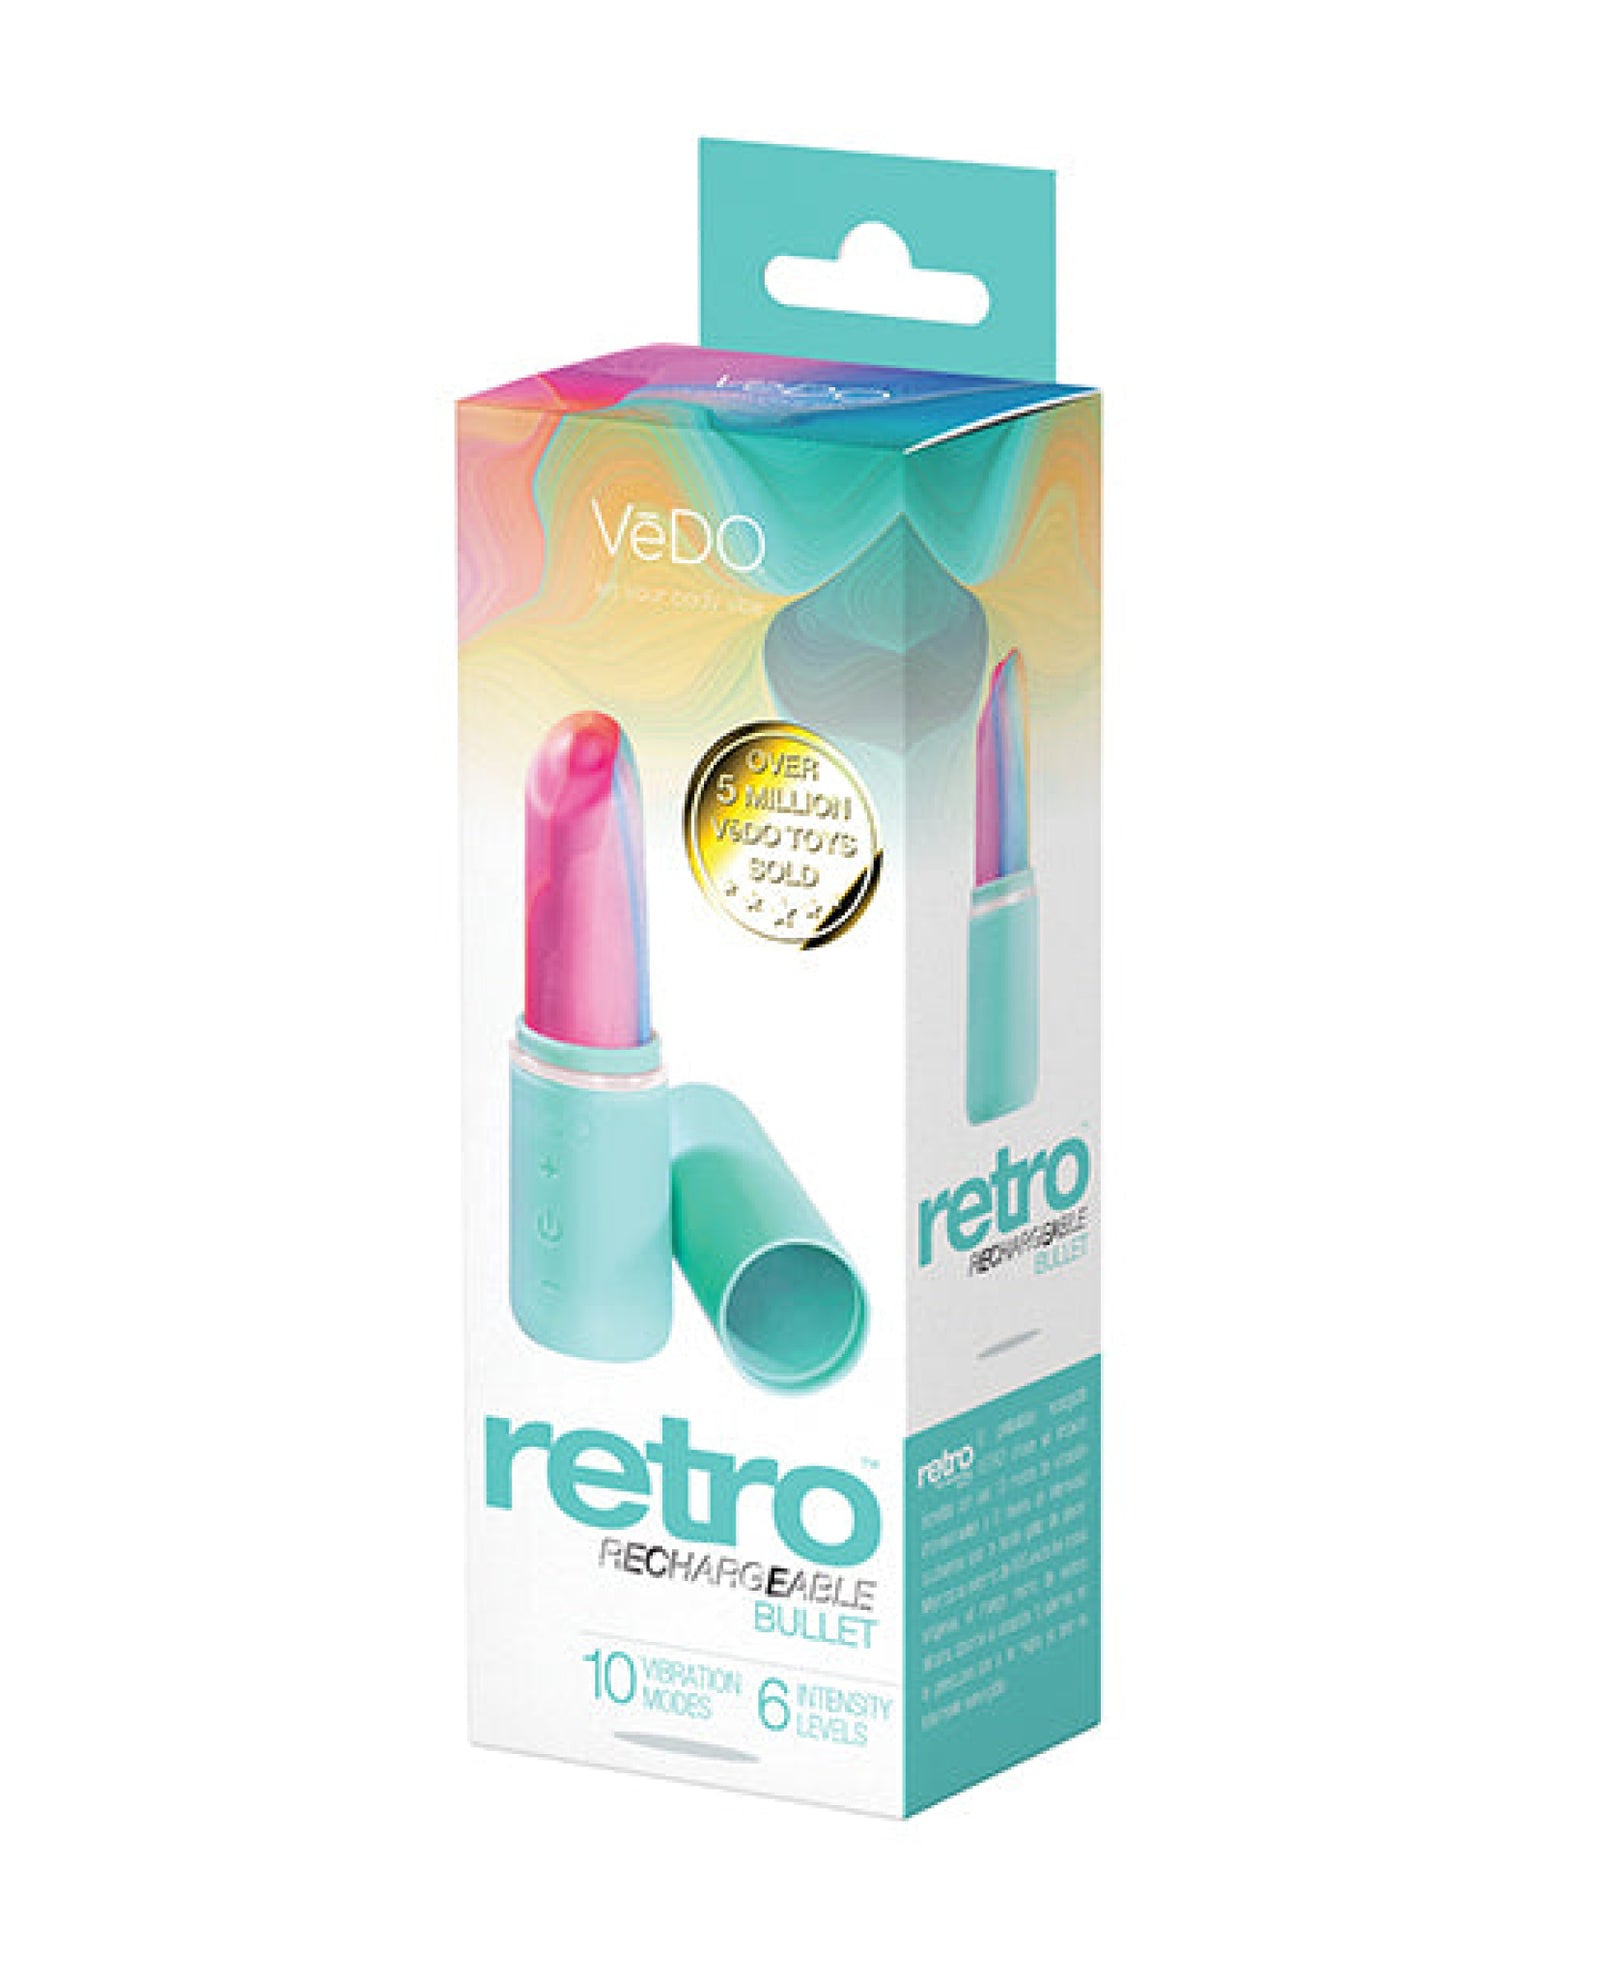 Vedo Retro Rechargeable Bullet Lip Stick Vibe VēDO